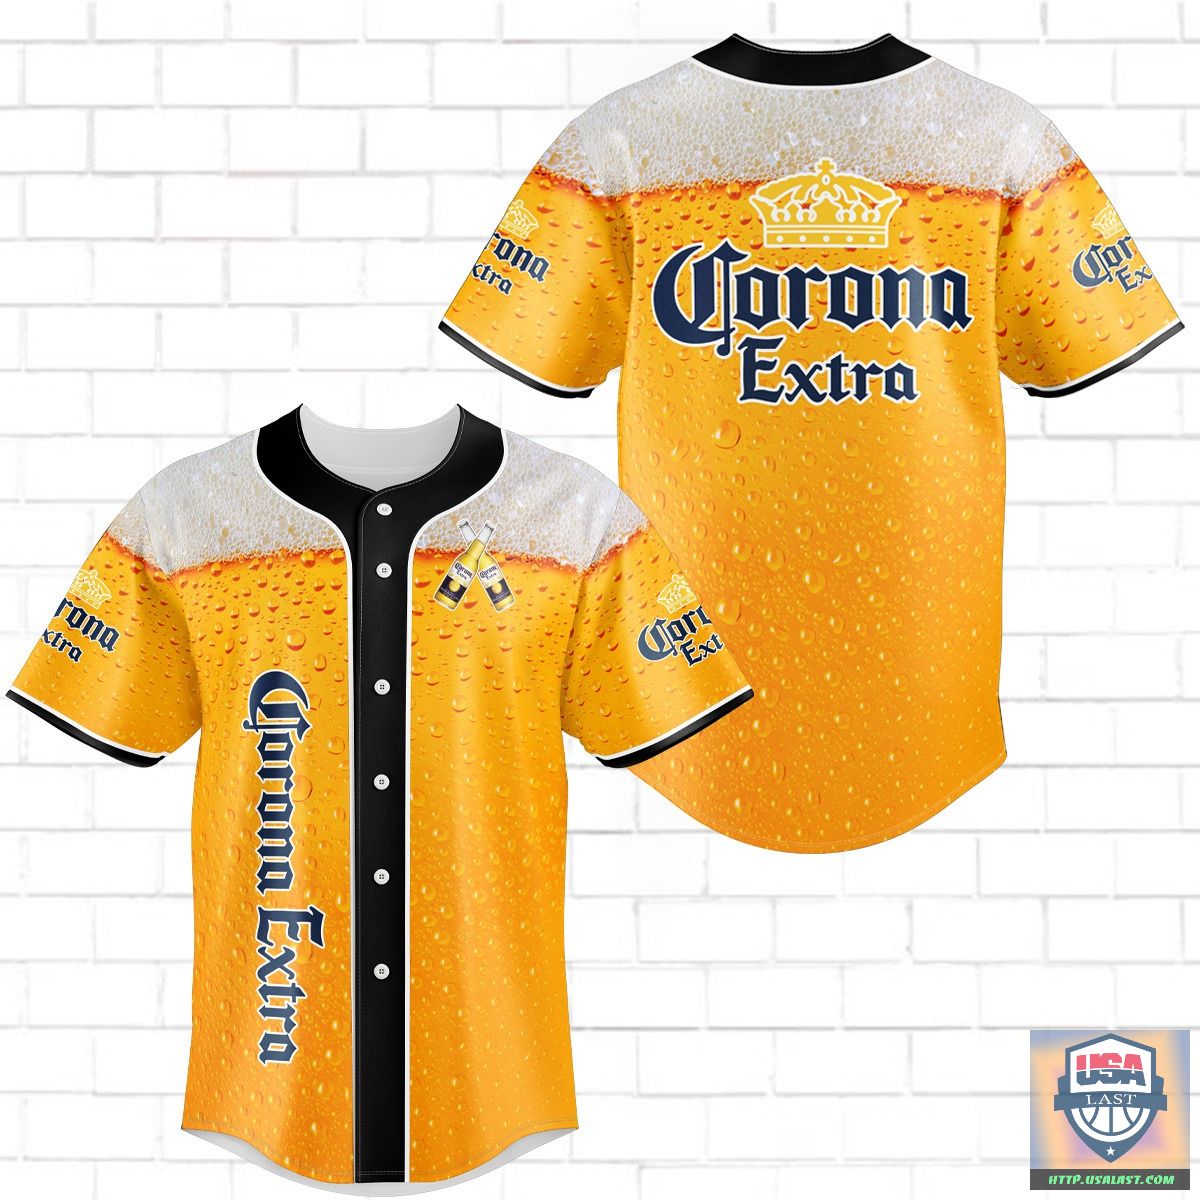 Corona Extra Baseball Jersey Shirt 2022 – Usalast